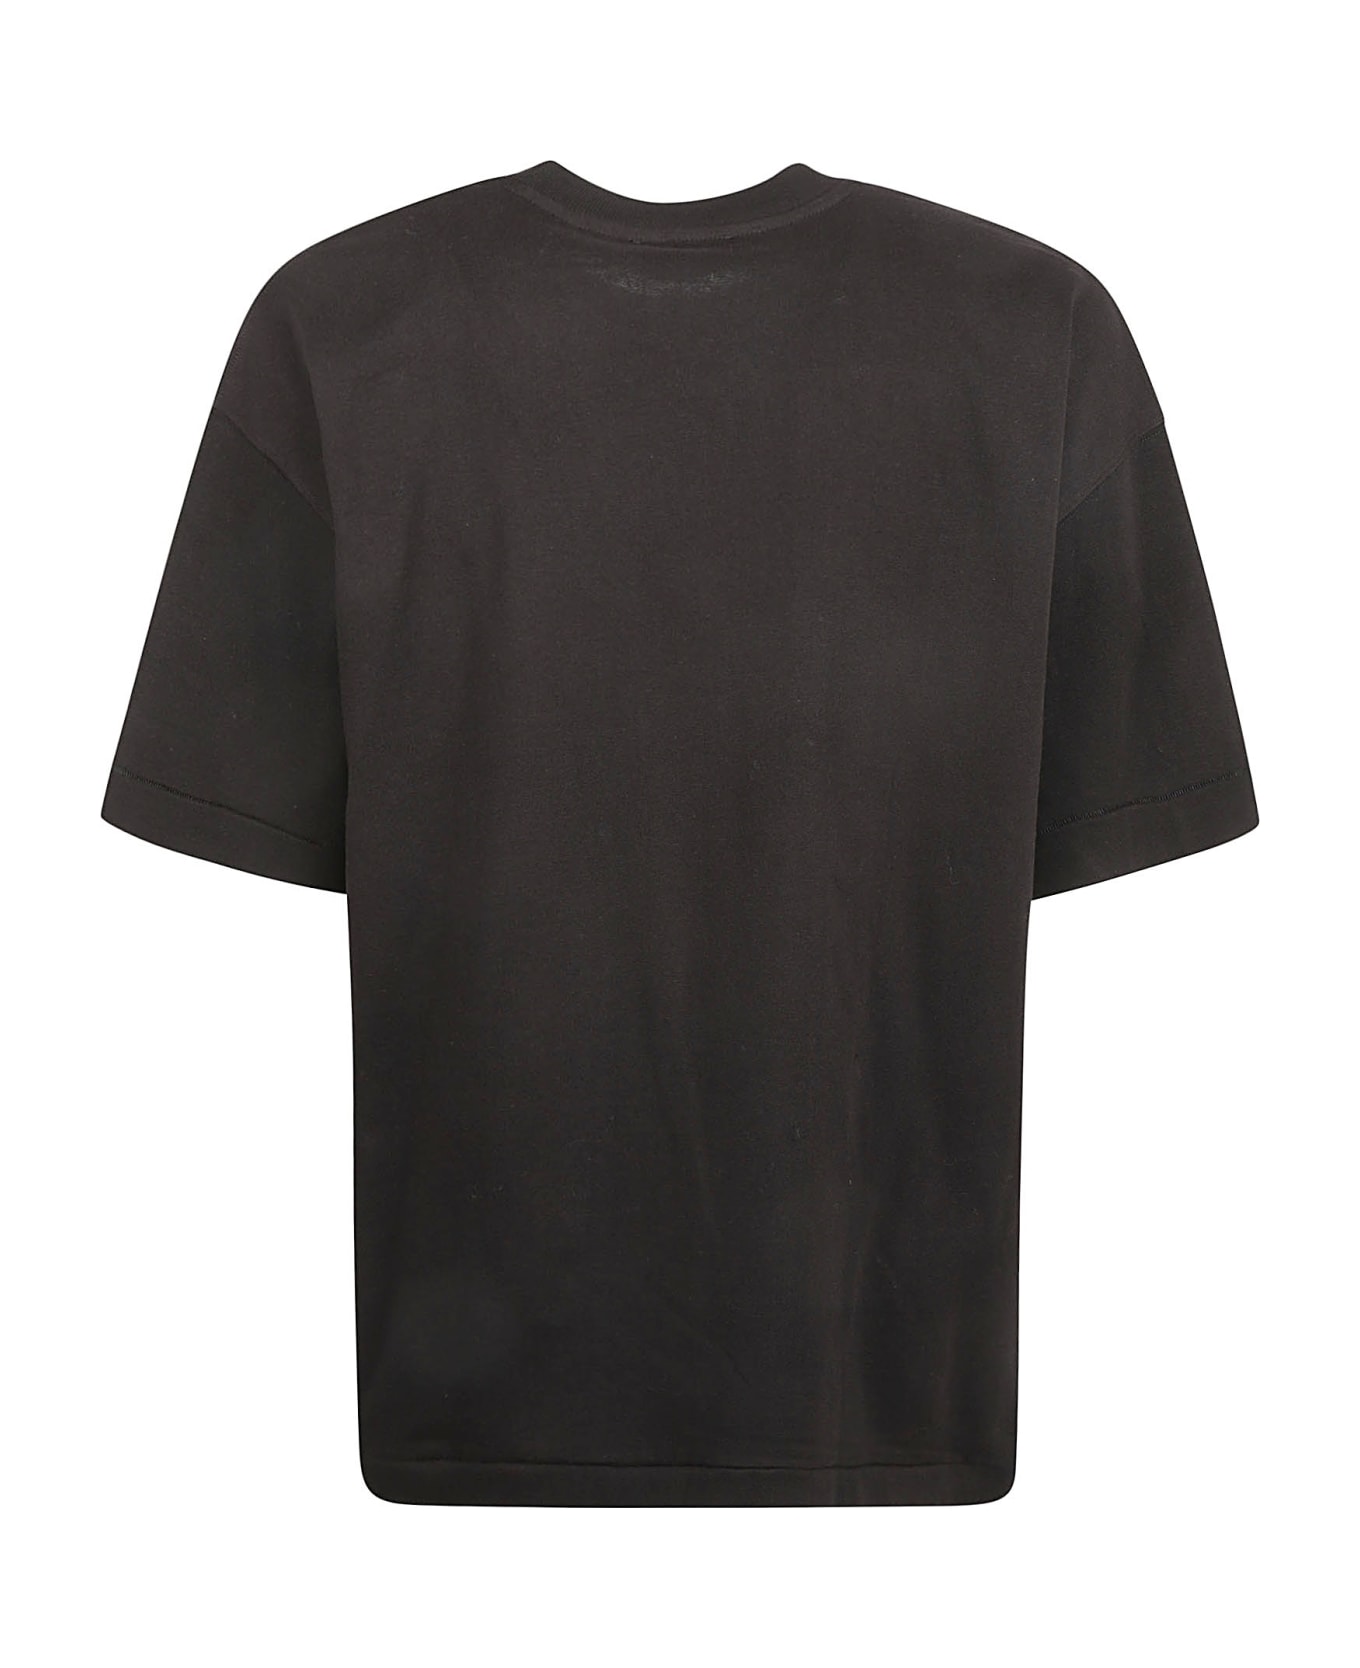 1989 Studio Rottweiler T-shirt - Black